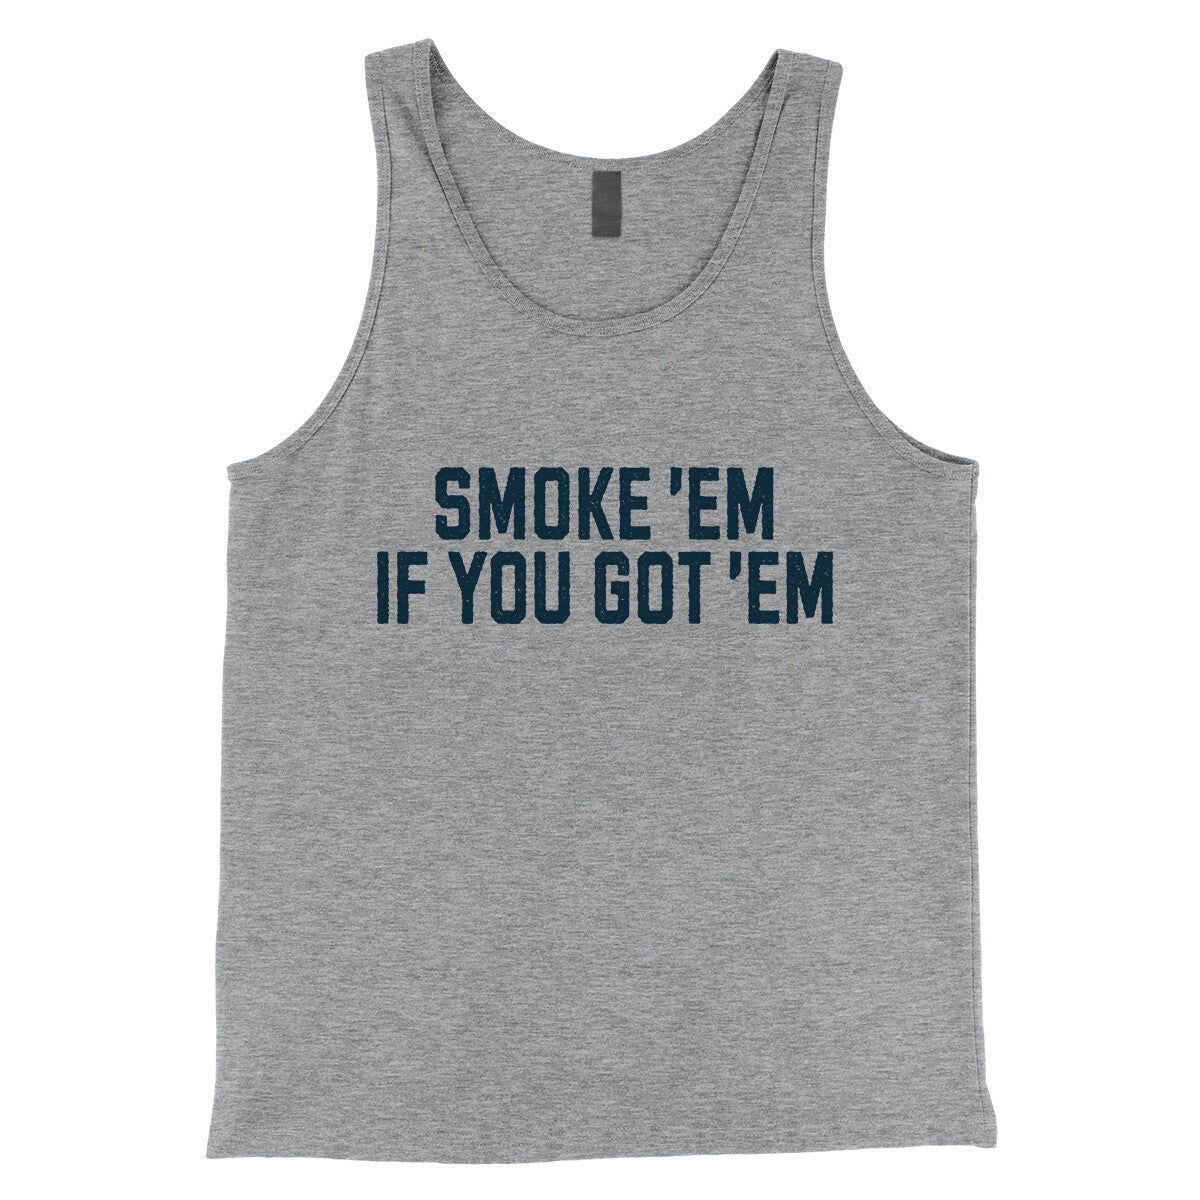 Smoke ‘em If you Got ‘em in Athletic Heather Color